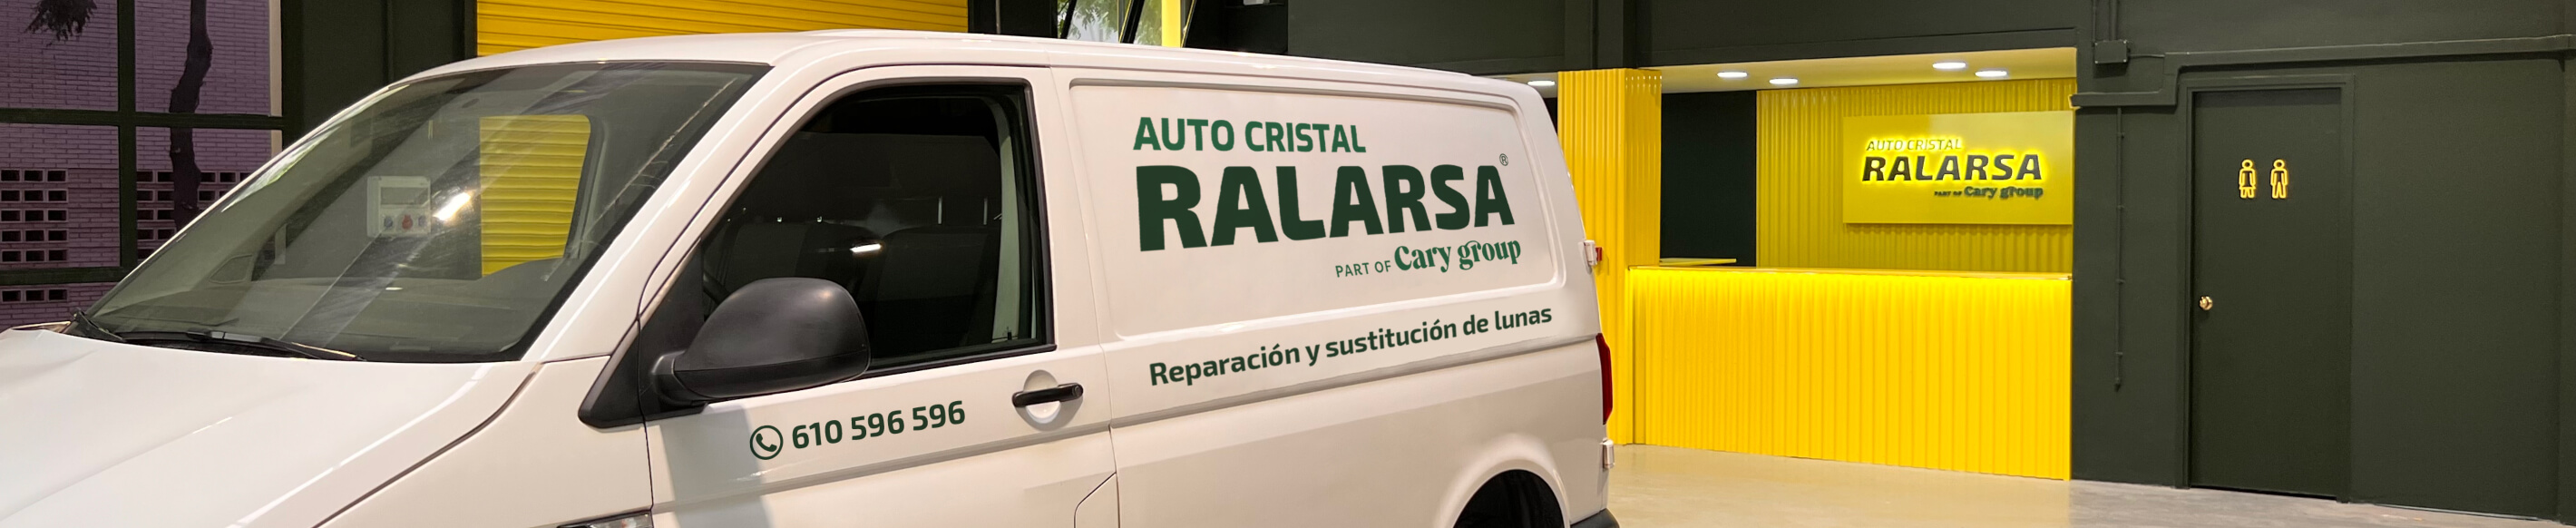 Choose the Ralarsa auto glass workshop